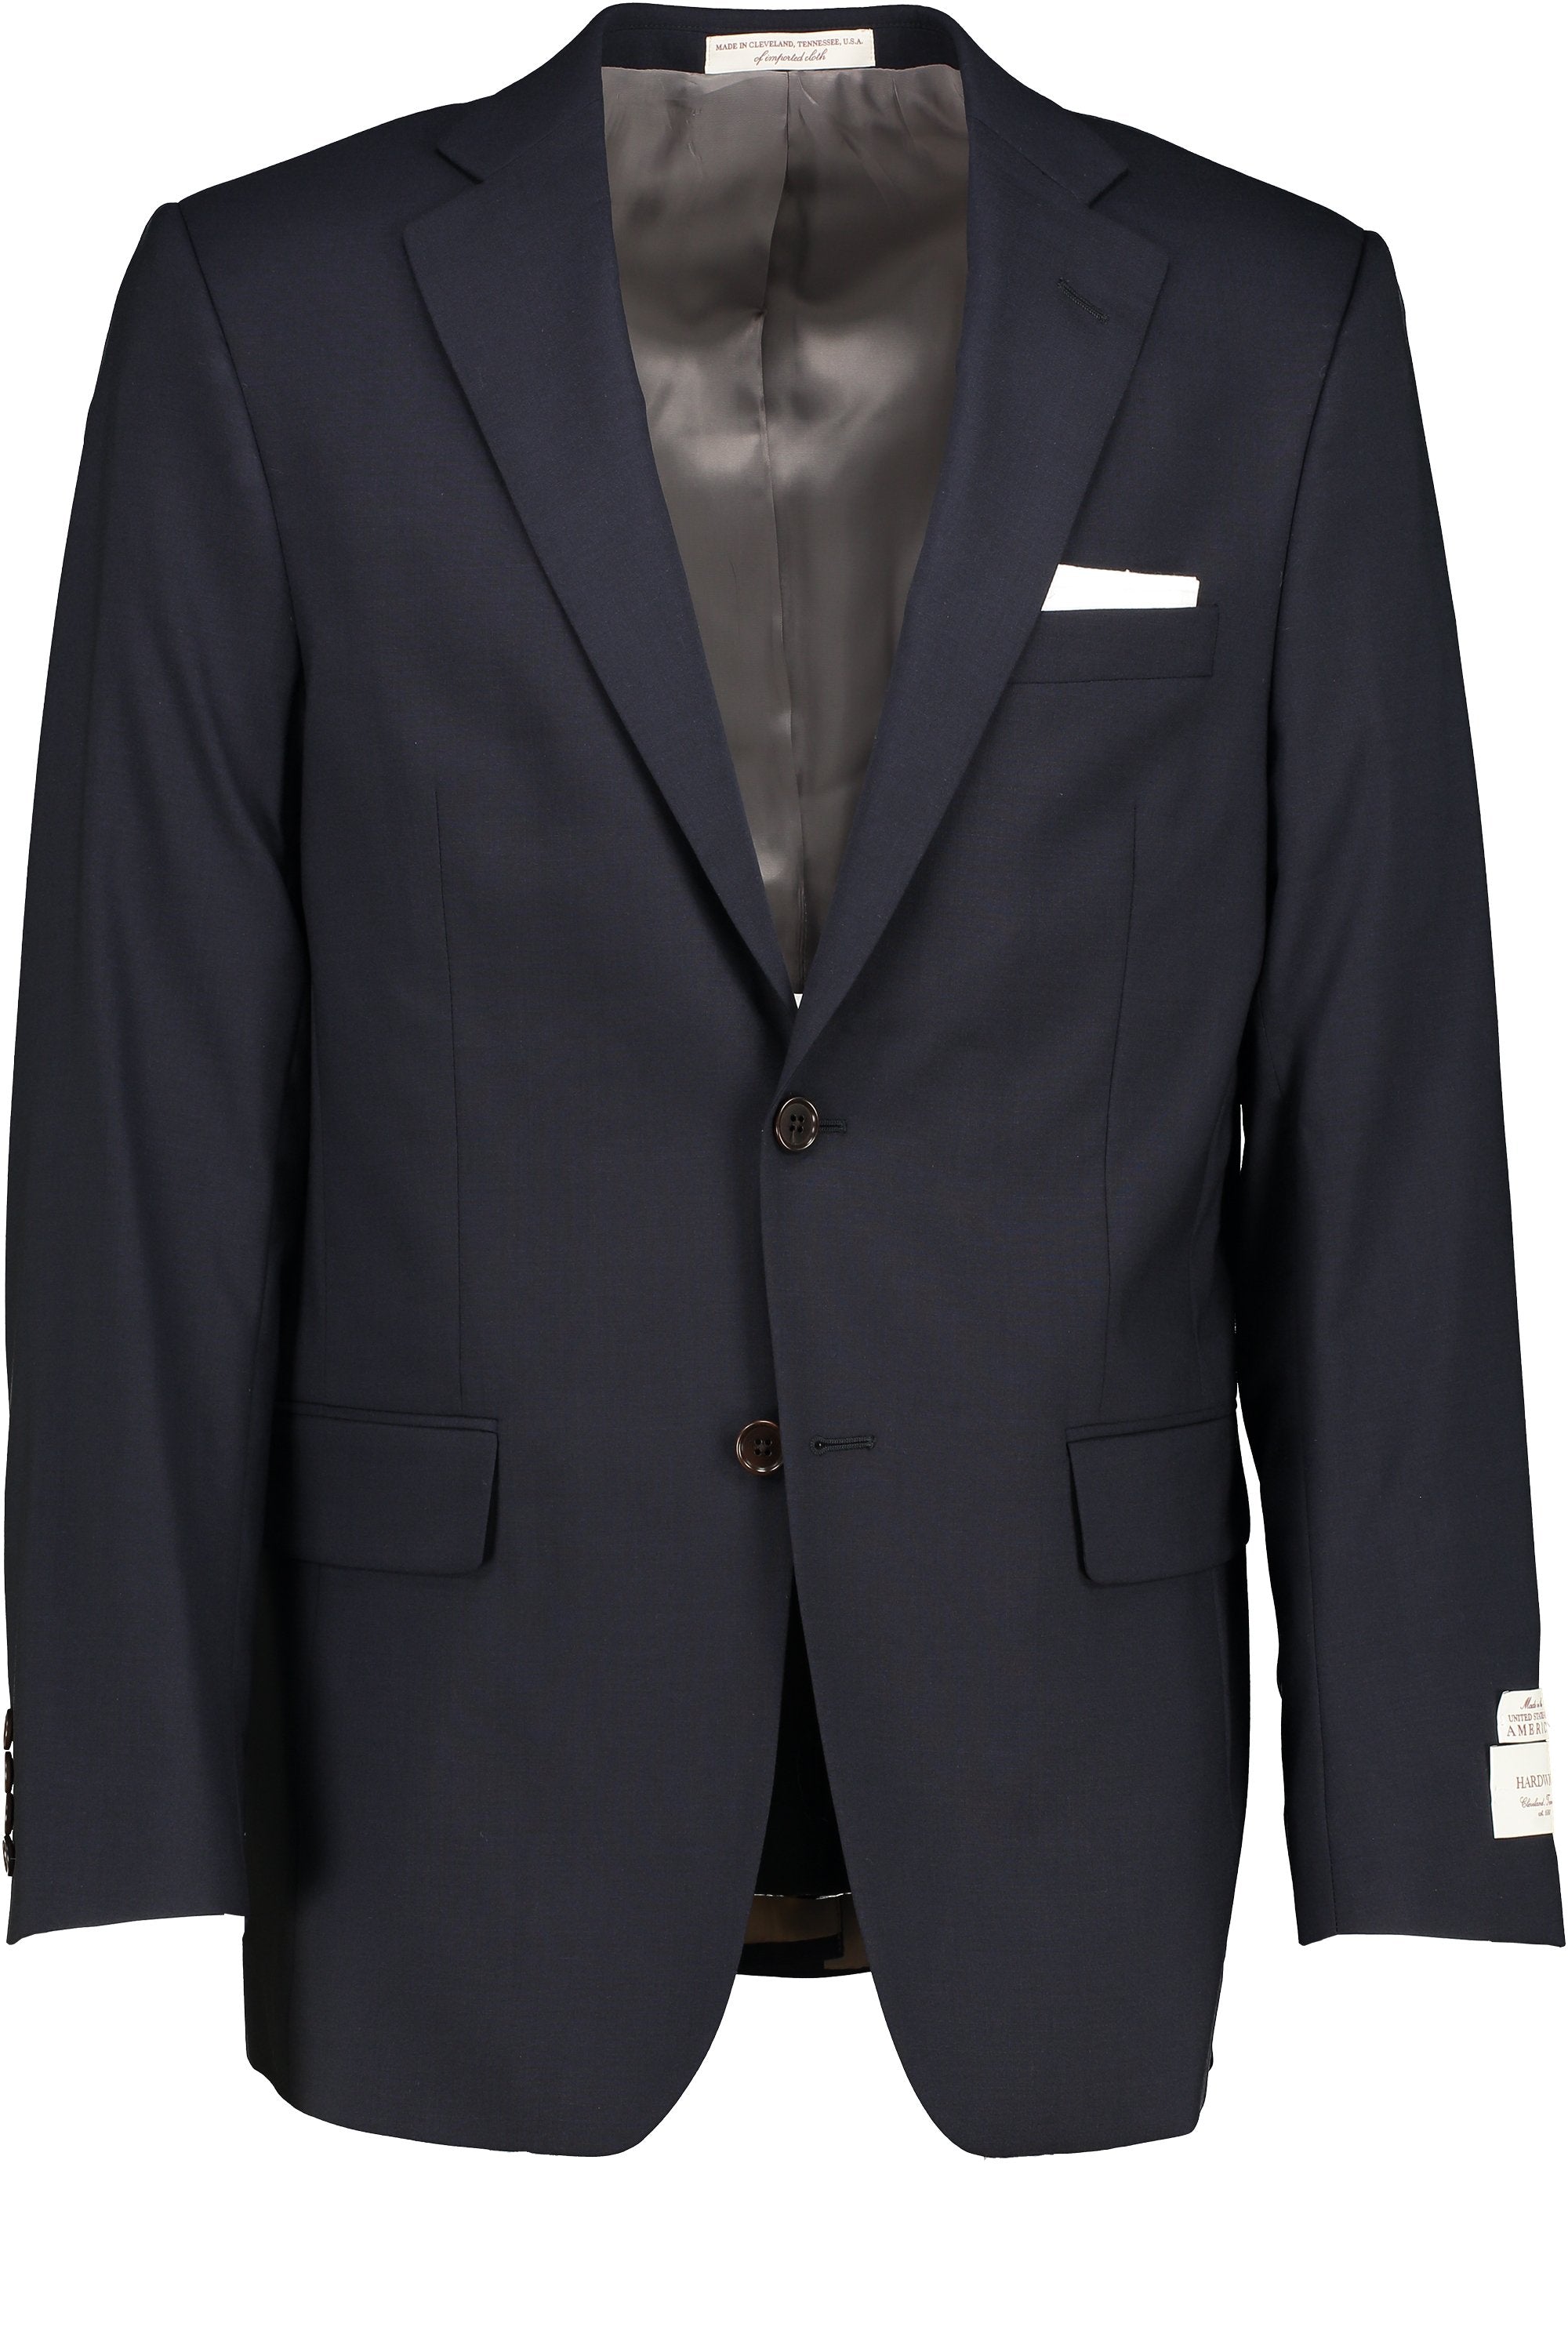 Men's Suit Separate - Coat Portly Cut NAVY 98/2 WOOL/LYCRA SUPER100